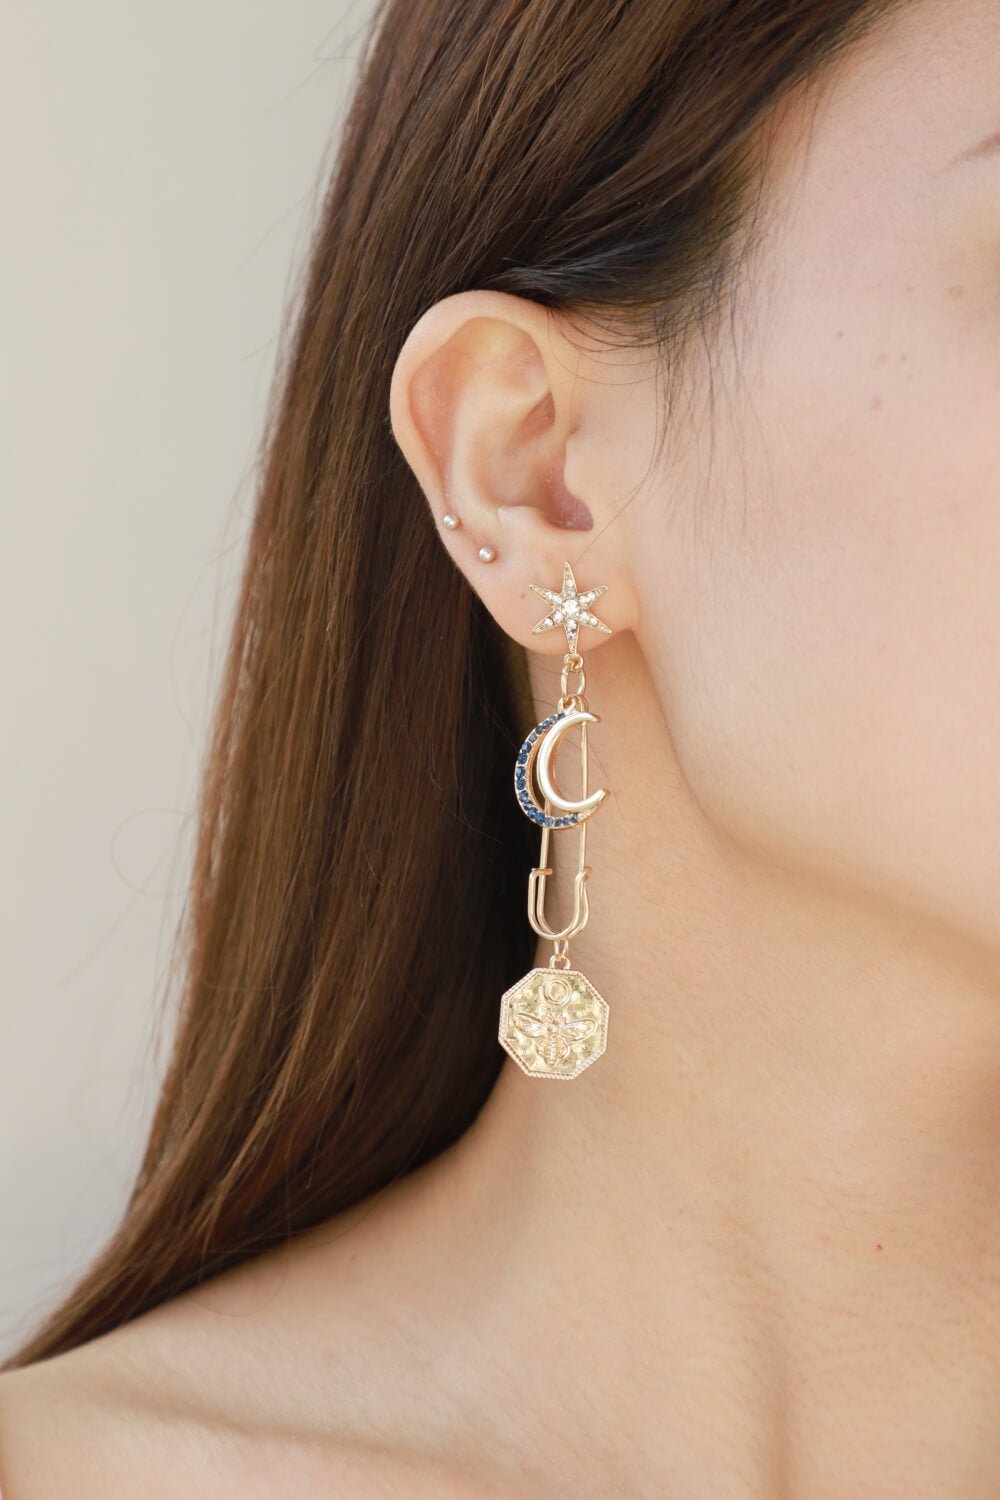 Women's Inlaid Rhinestone Moon and Star Drop Earrings